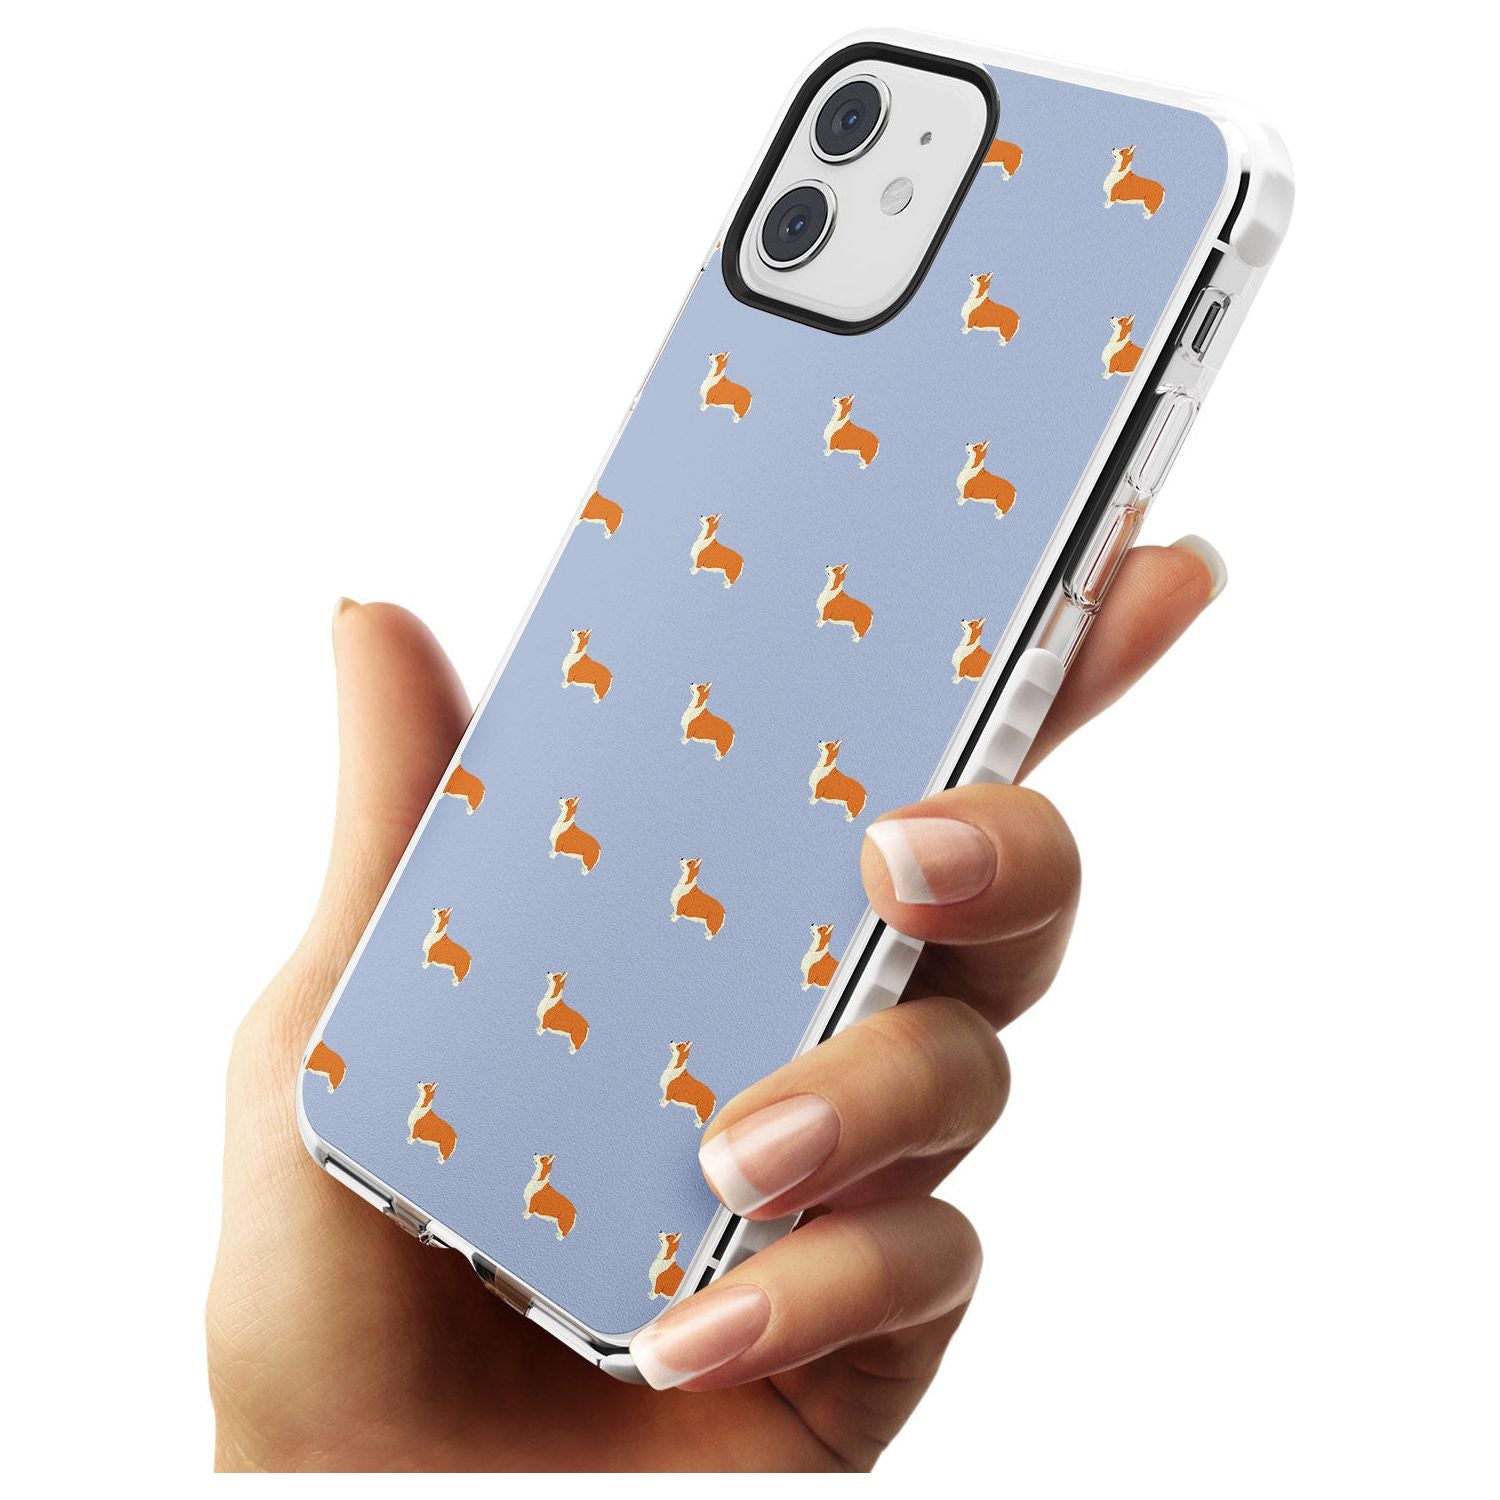 Pembroke Welsh Corgi Dog Pattern Impact Phone Case for iPhone 11